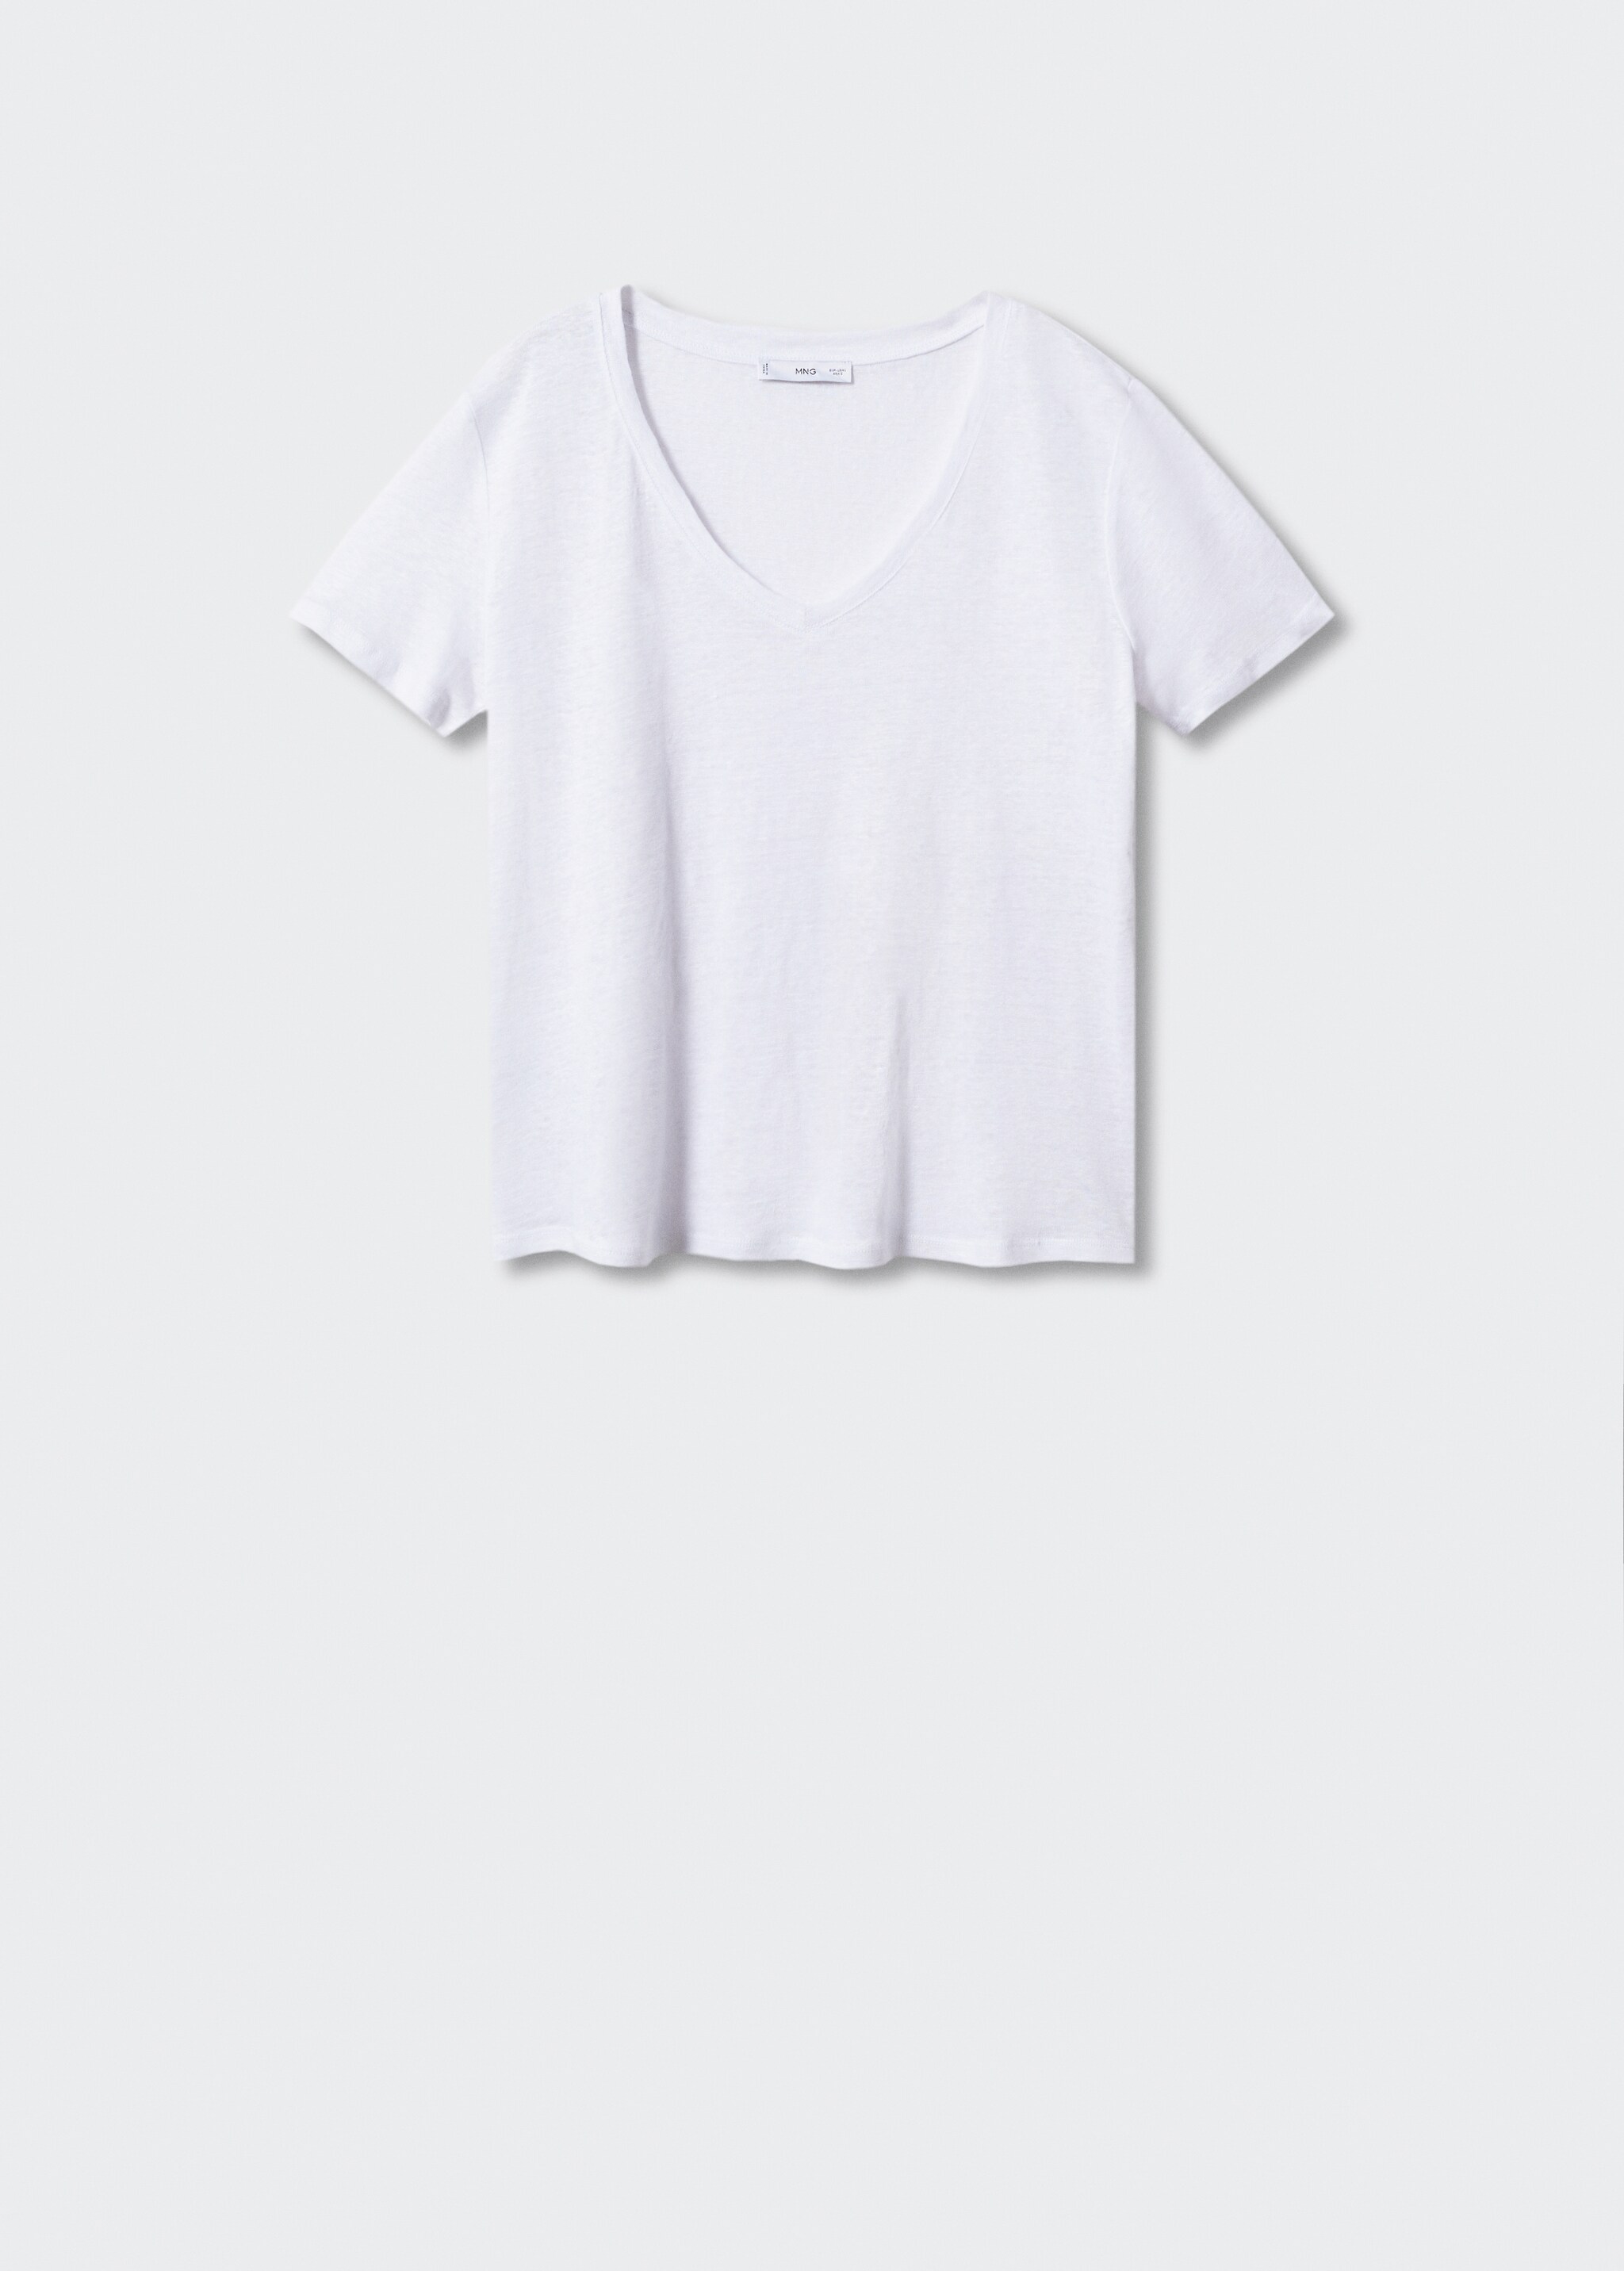 V-neck linen t-shirt - Article without model